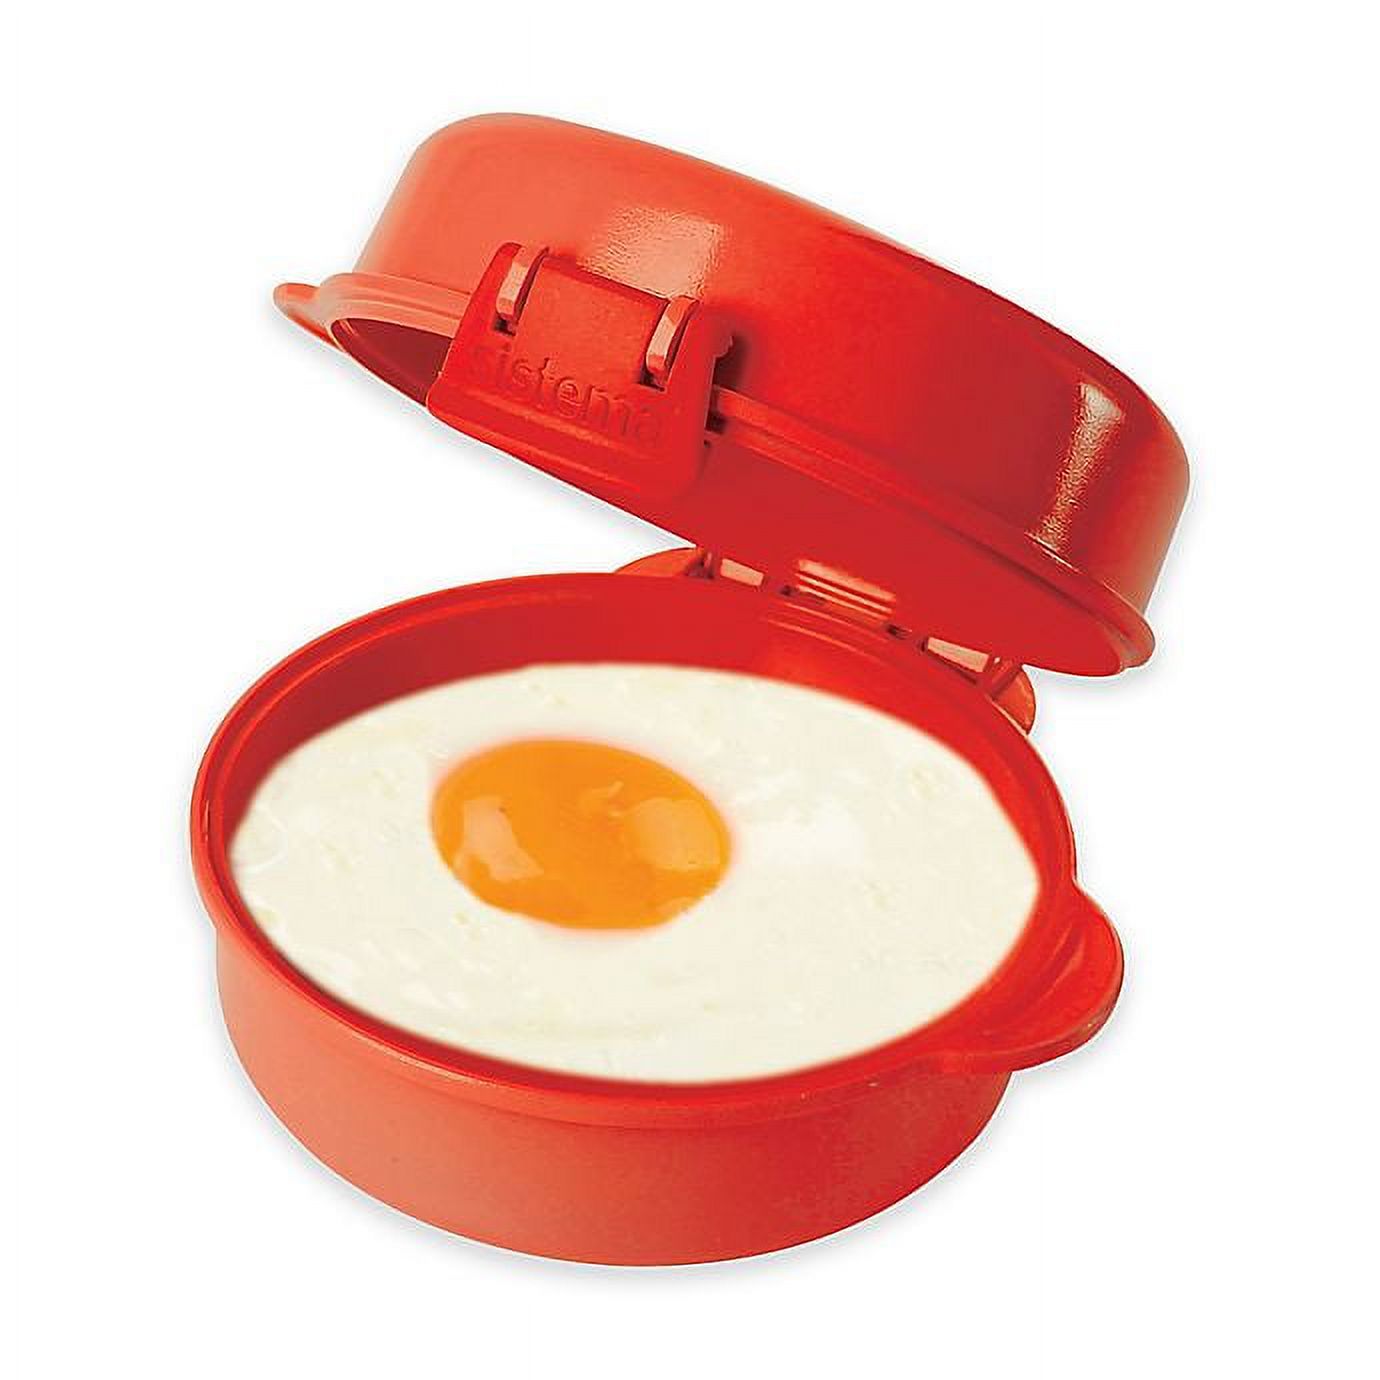 Sistema Microwave Cookware Easy Eggs, Red, 9.16 Oz/271 ml Single Breakfast - image 1 of 3